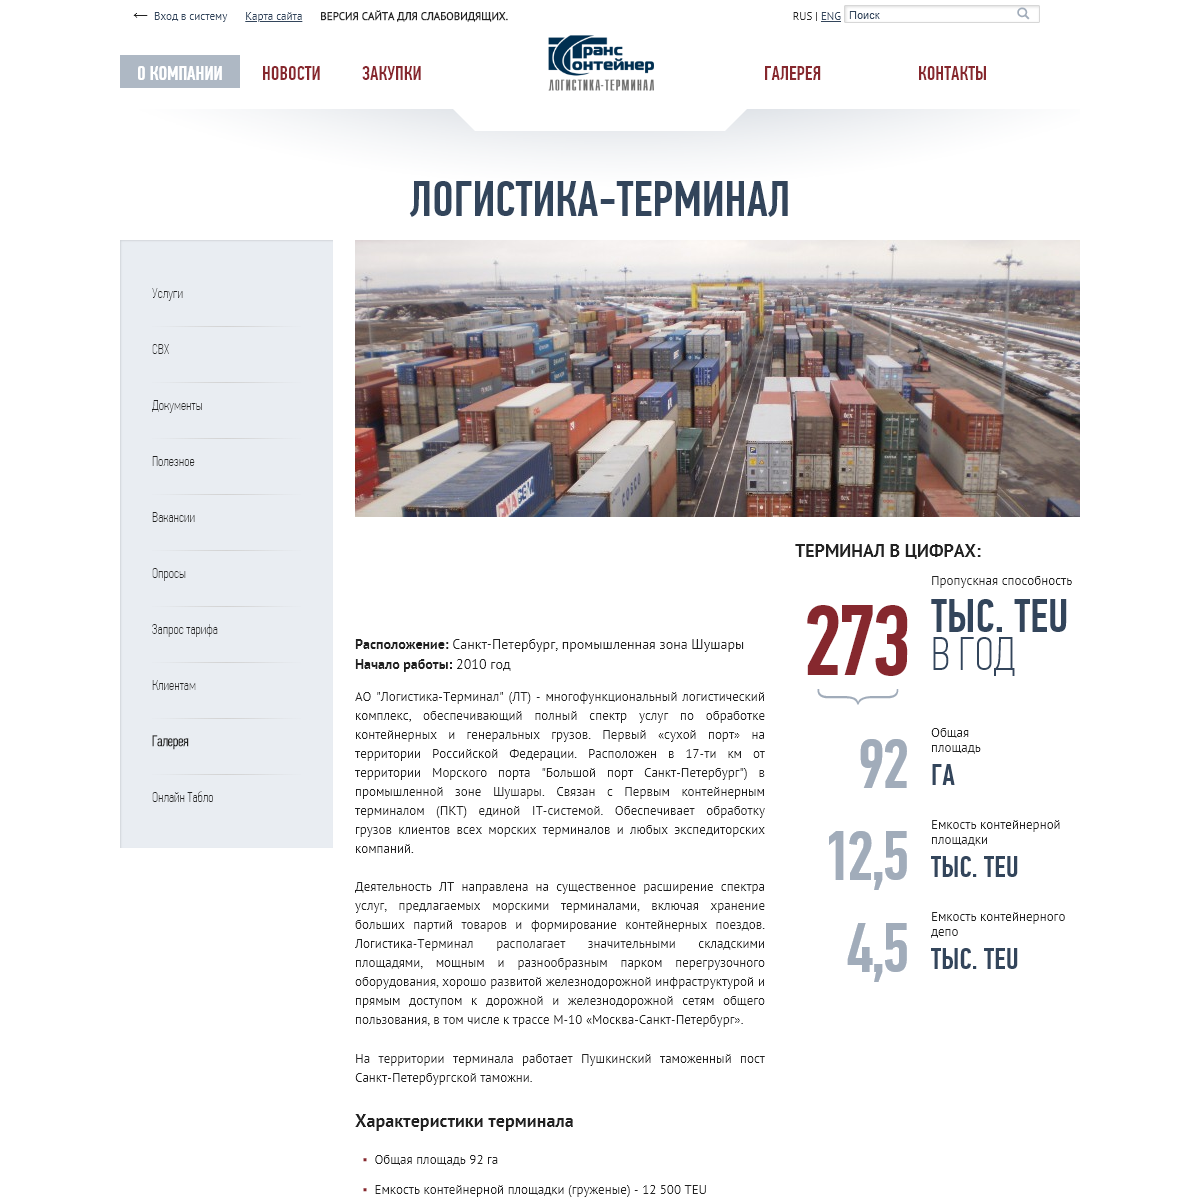 A complete backup of logistika-terminal.ru